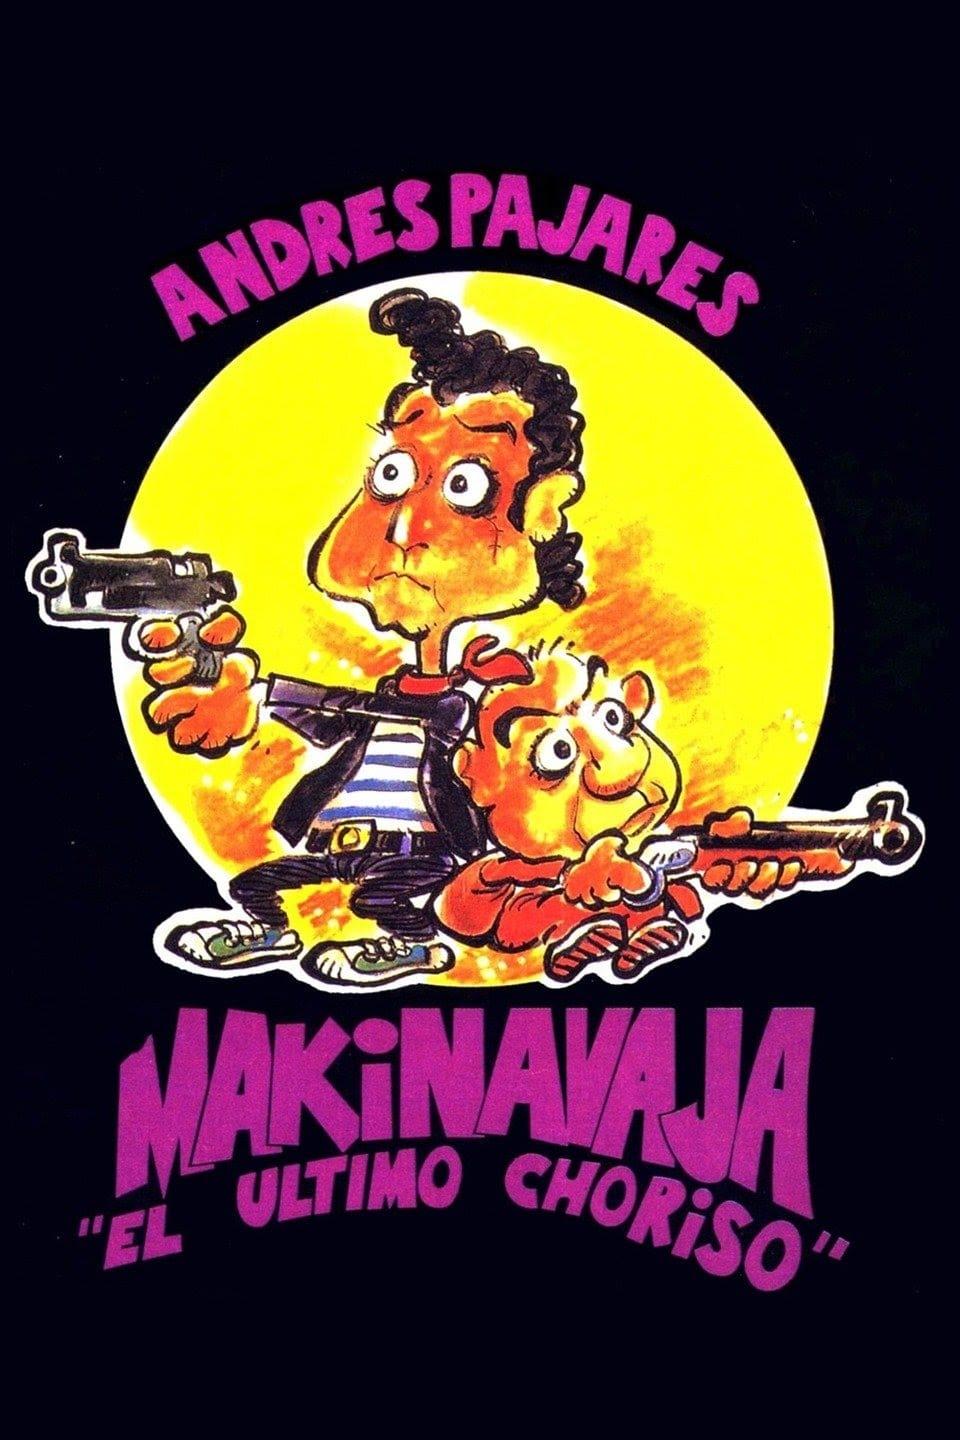 Makinavaja, el último choriso poster